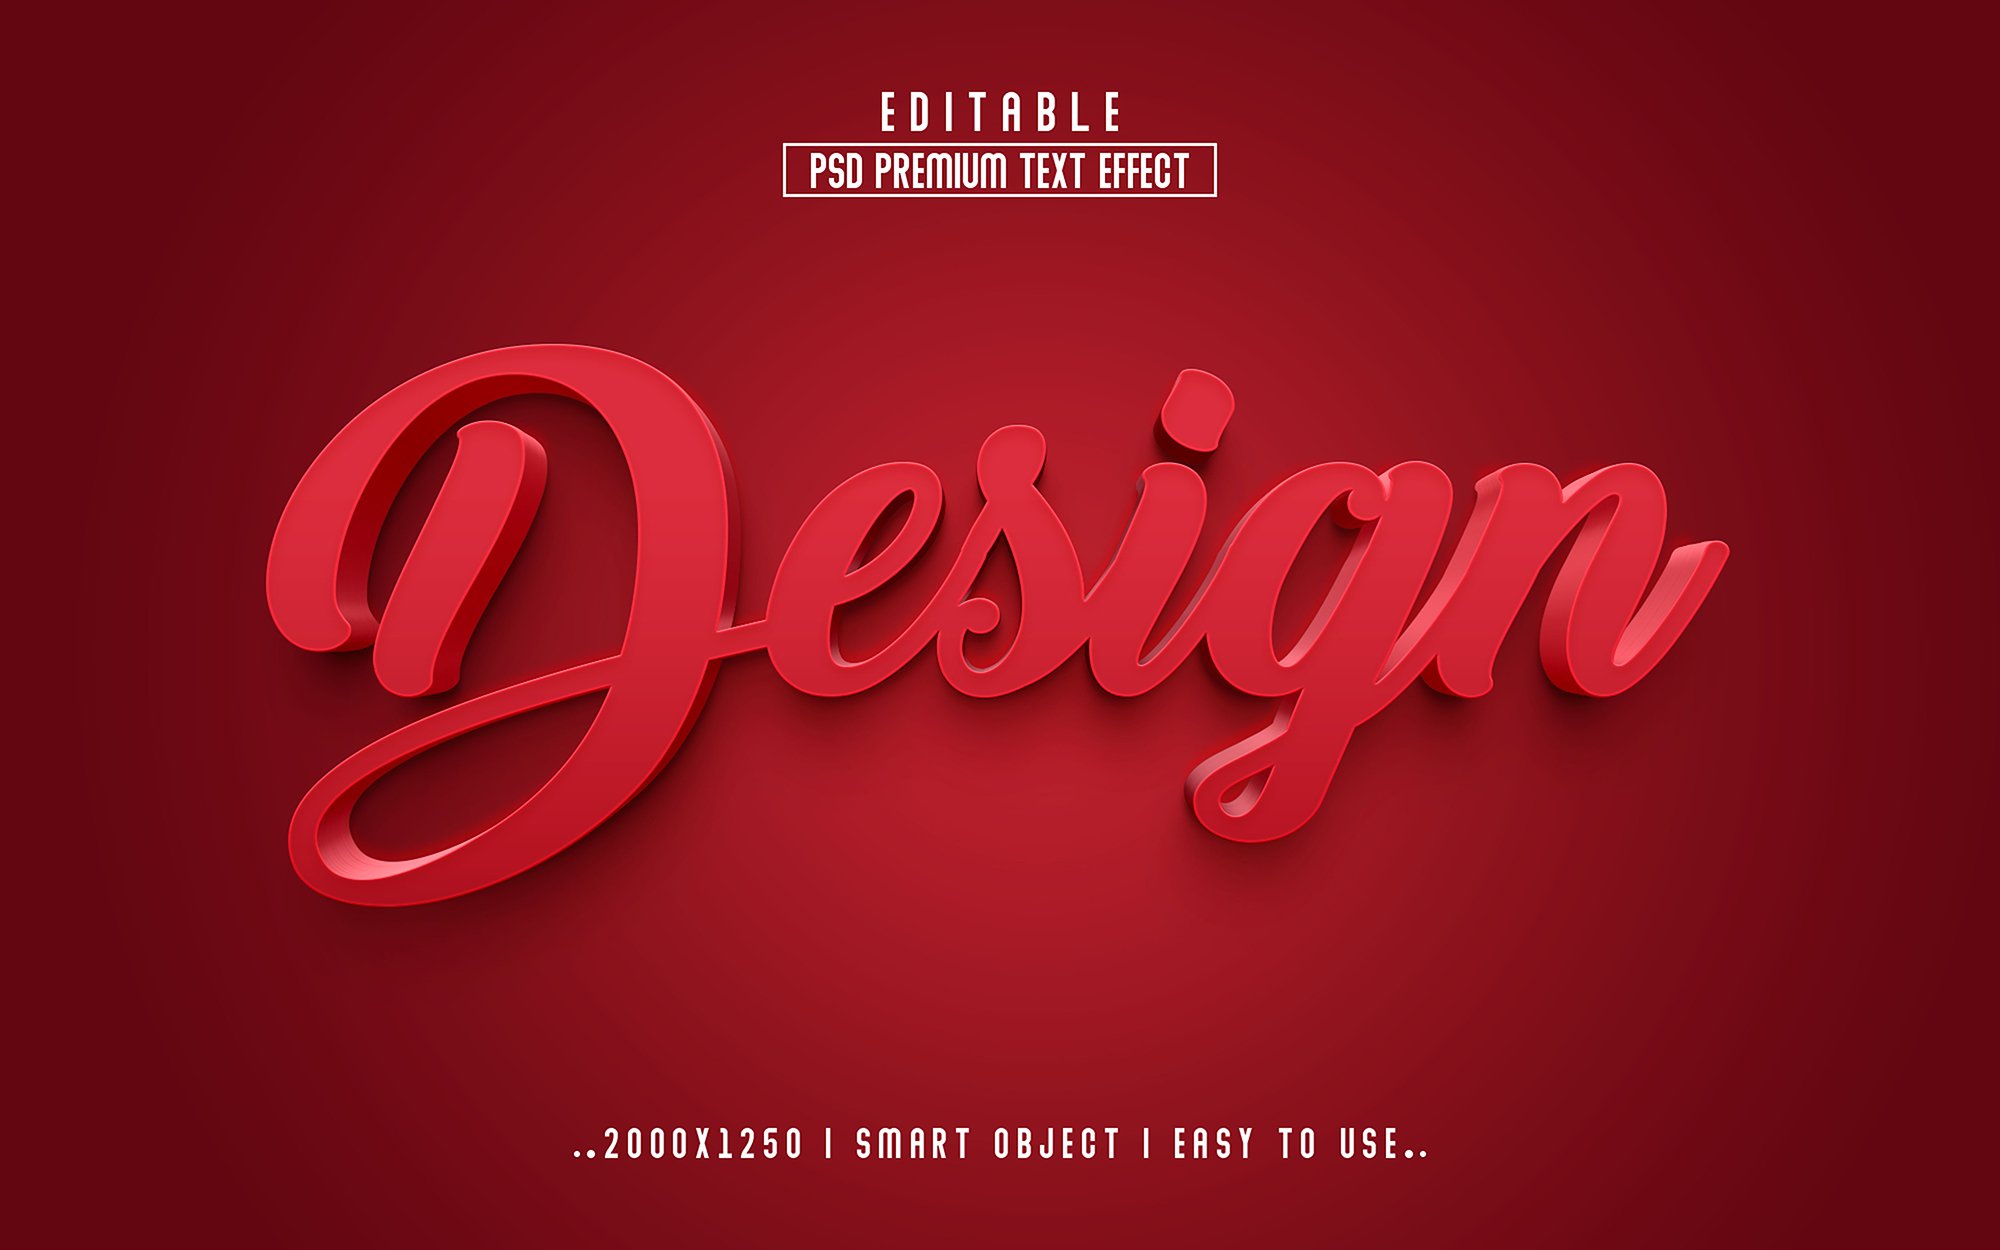 Design 3D Editable psd Text Effectcover image.